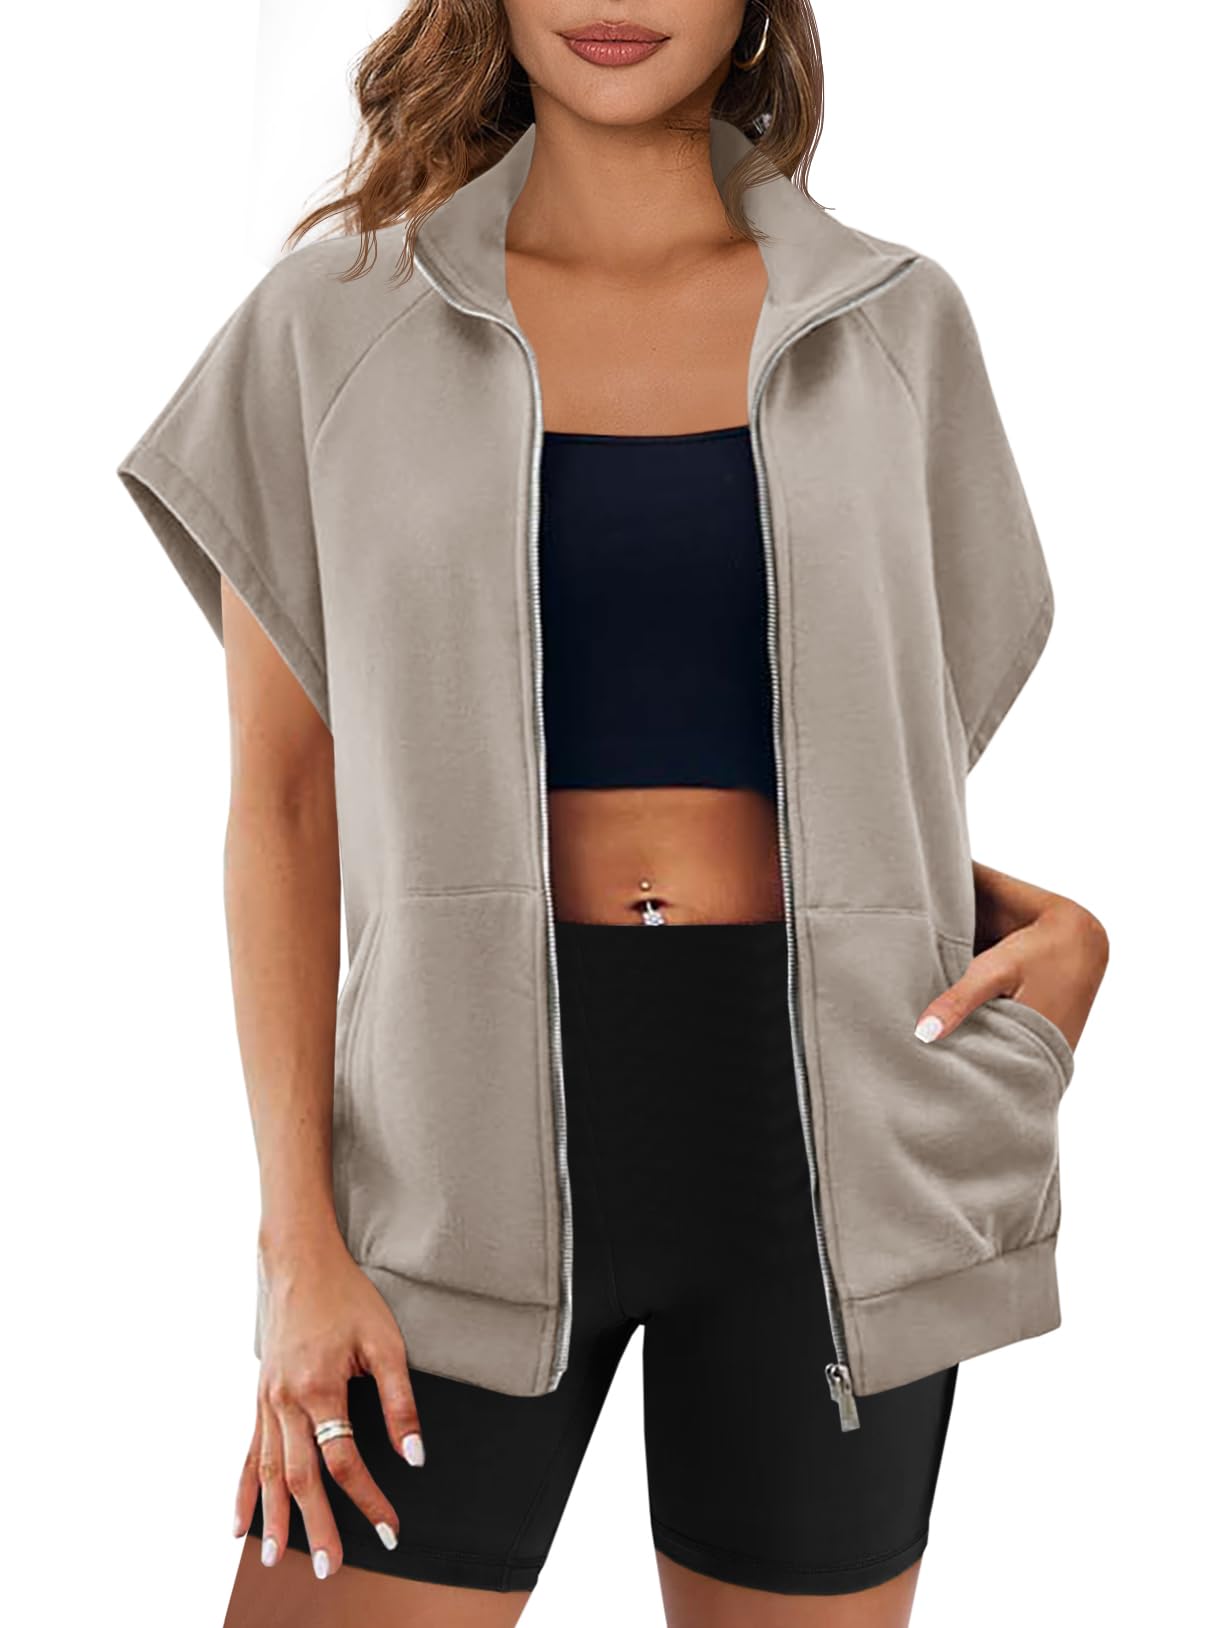 Womens Zip Up Sweatshirts Sleeveless Oversized Sweatshirt(Buy 2 Free Shipping)